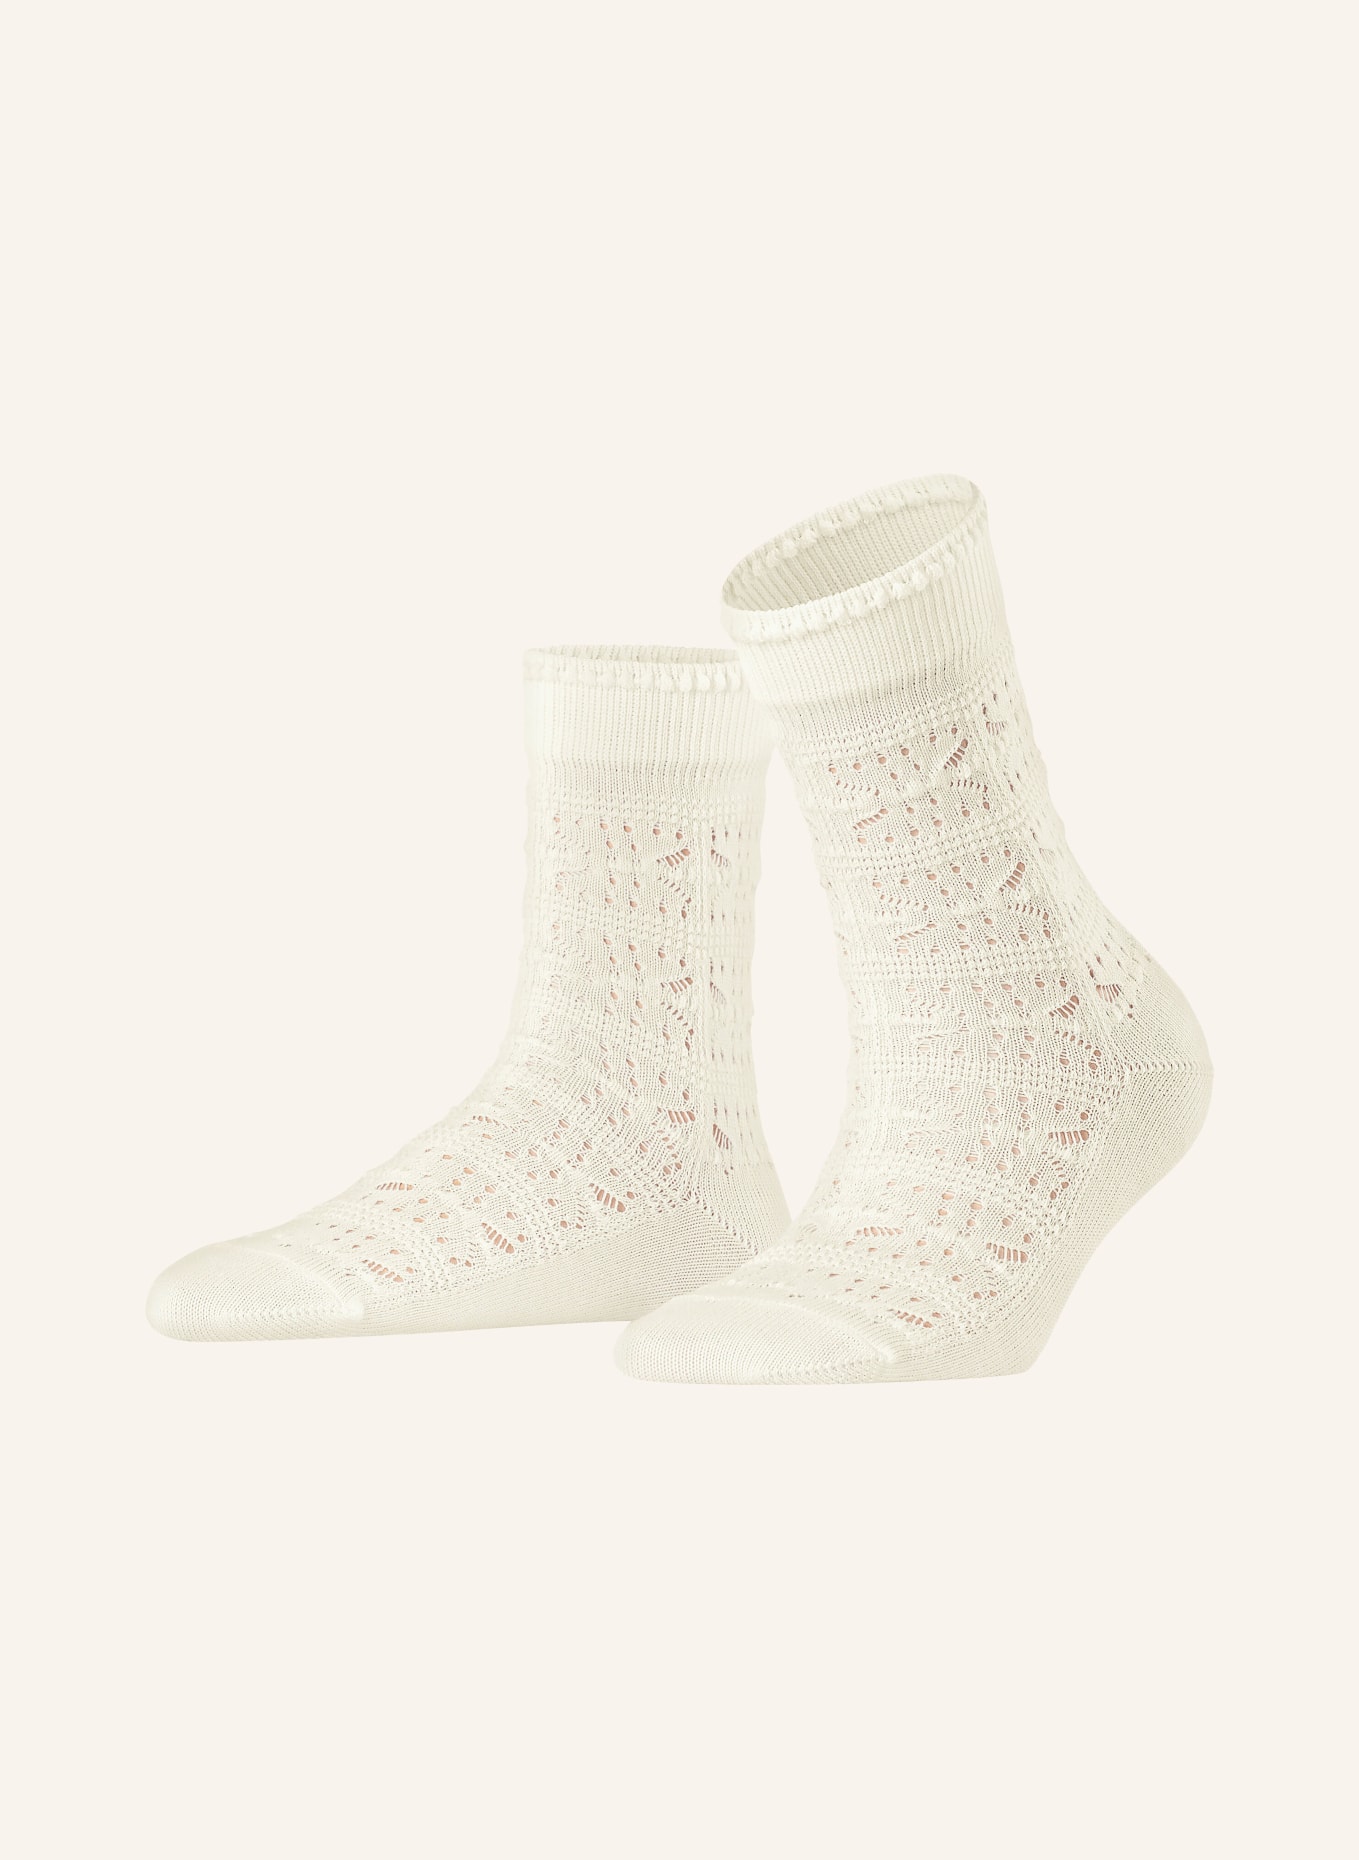 FALKE Socken GRANNY SQUARE, Farbe: 2010 off-white (Bild 1)